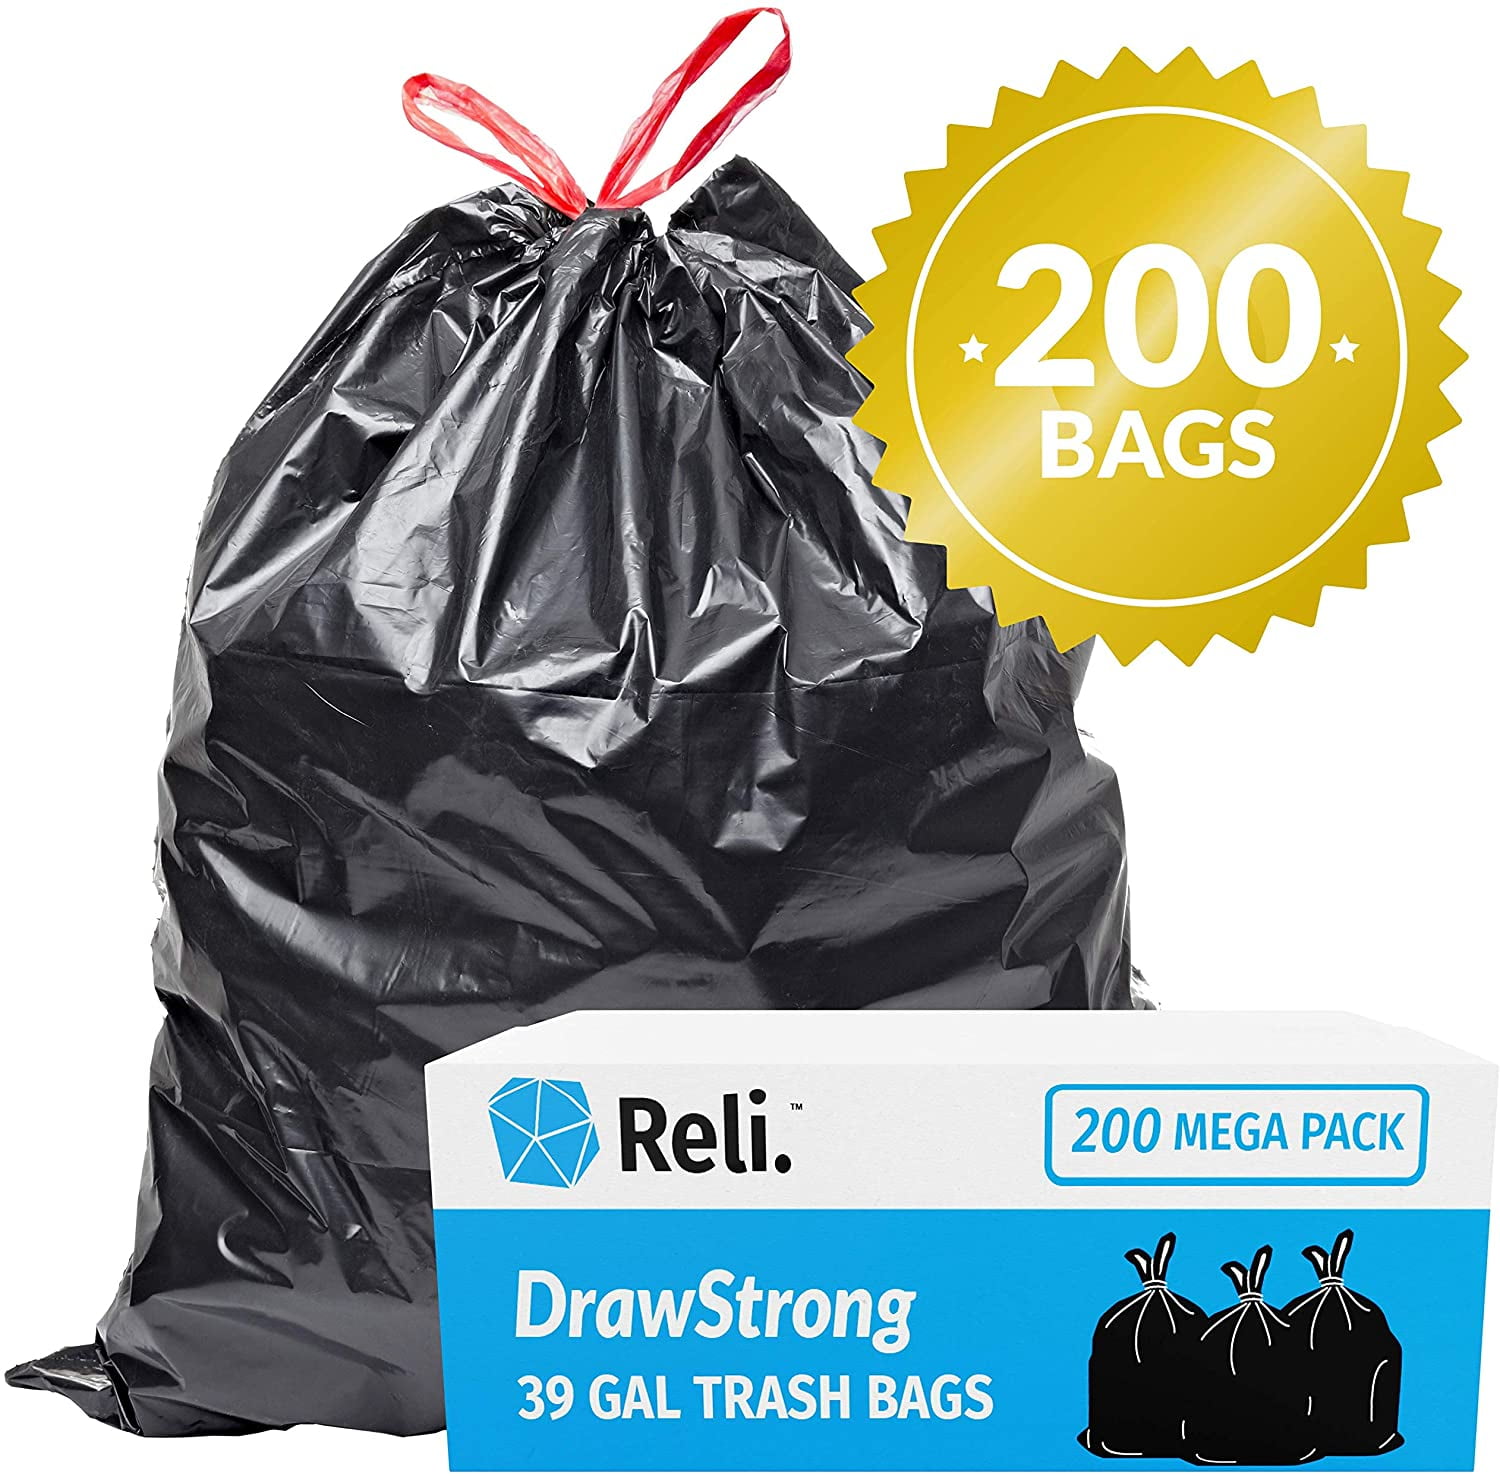  Reli. 39 Gallon Trash Bags Drawstring (200 Count Bulk) Large 39  Gallon Heavy Duty Drawstring Trash Bags - Black Garbage Bags 39 Gallon  Capacity, Lawn Leaf (39 Gal) : Books